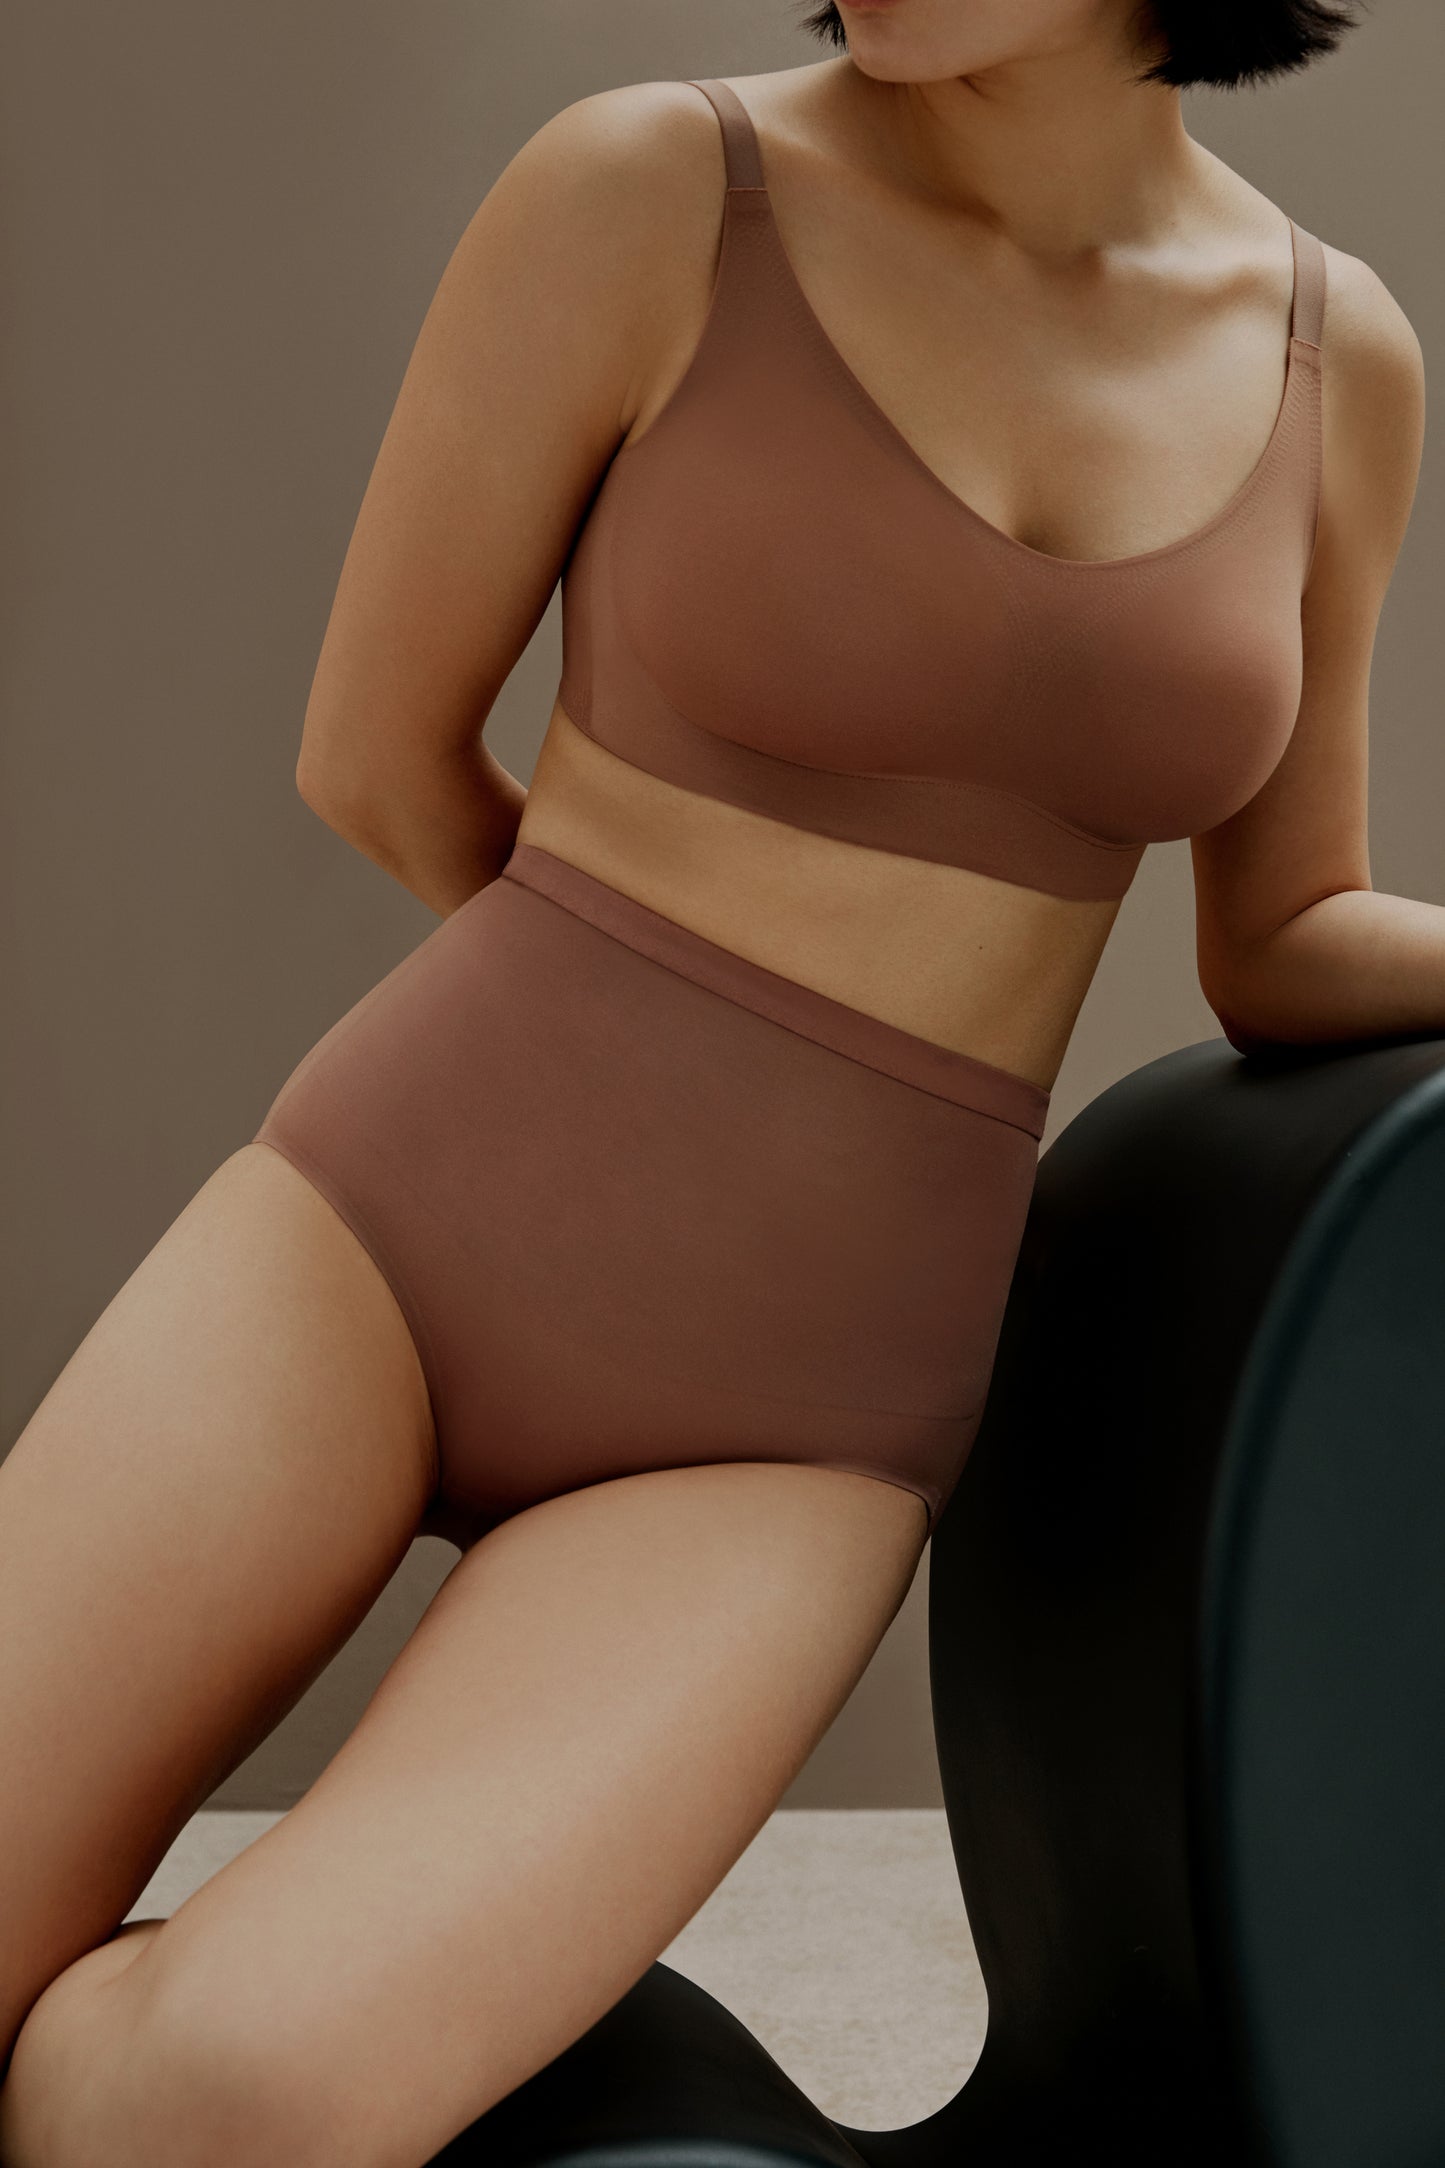 woman wearing brick color bra and matching panties